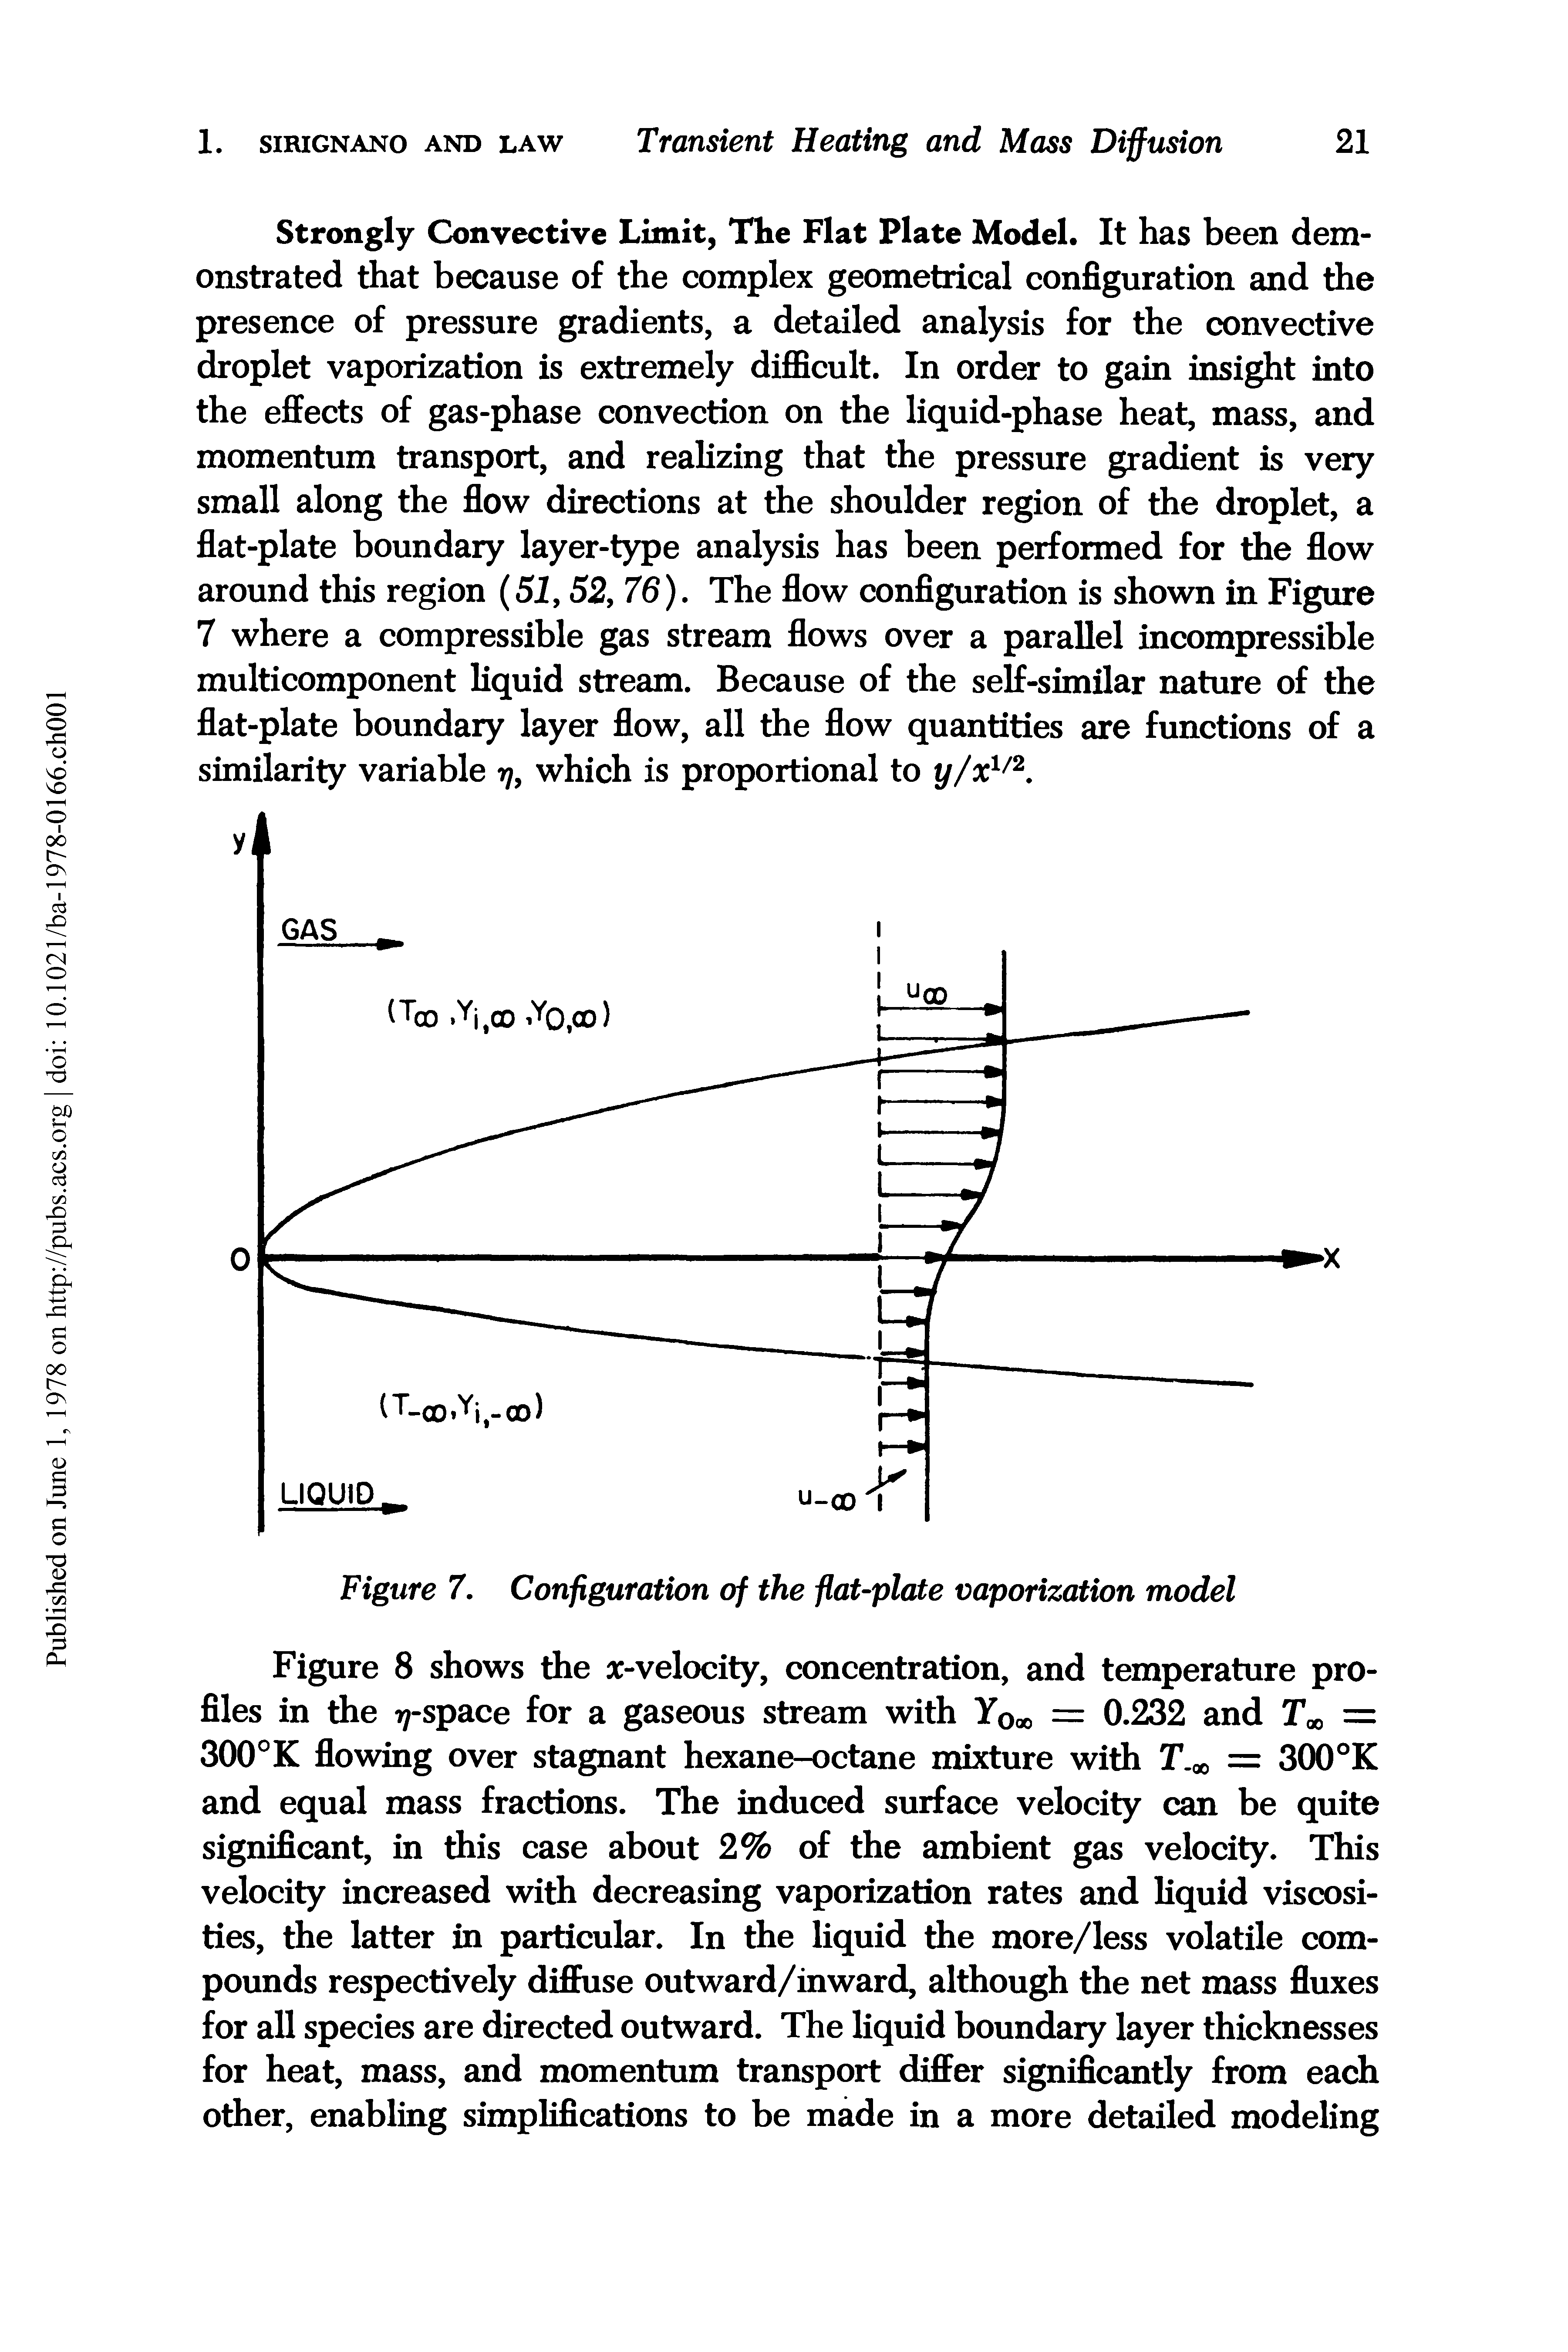 Figure 7, Configuration of the fiat-plate vaporization model...